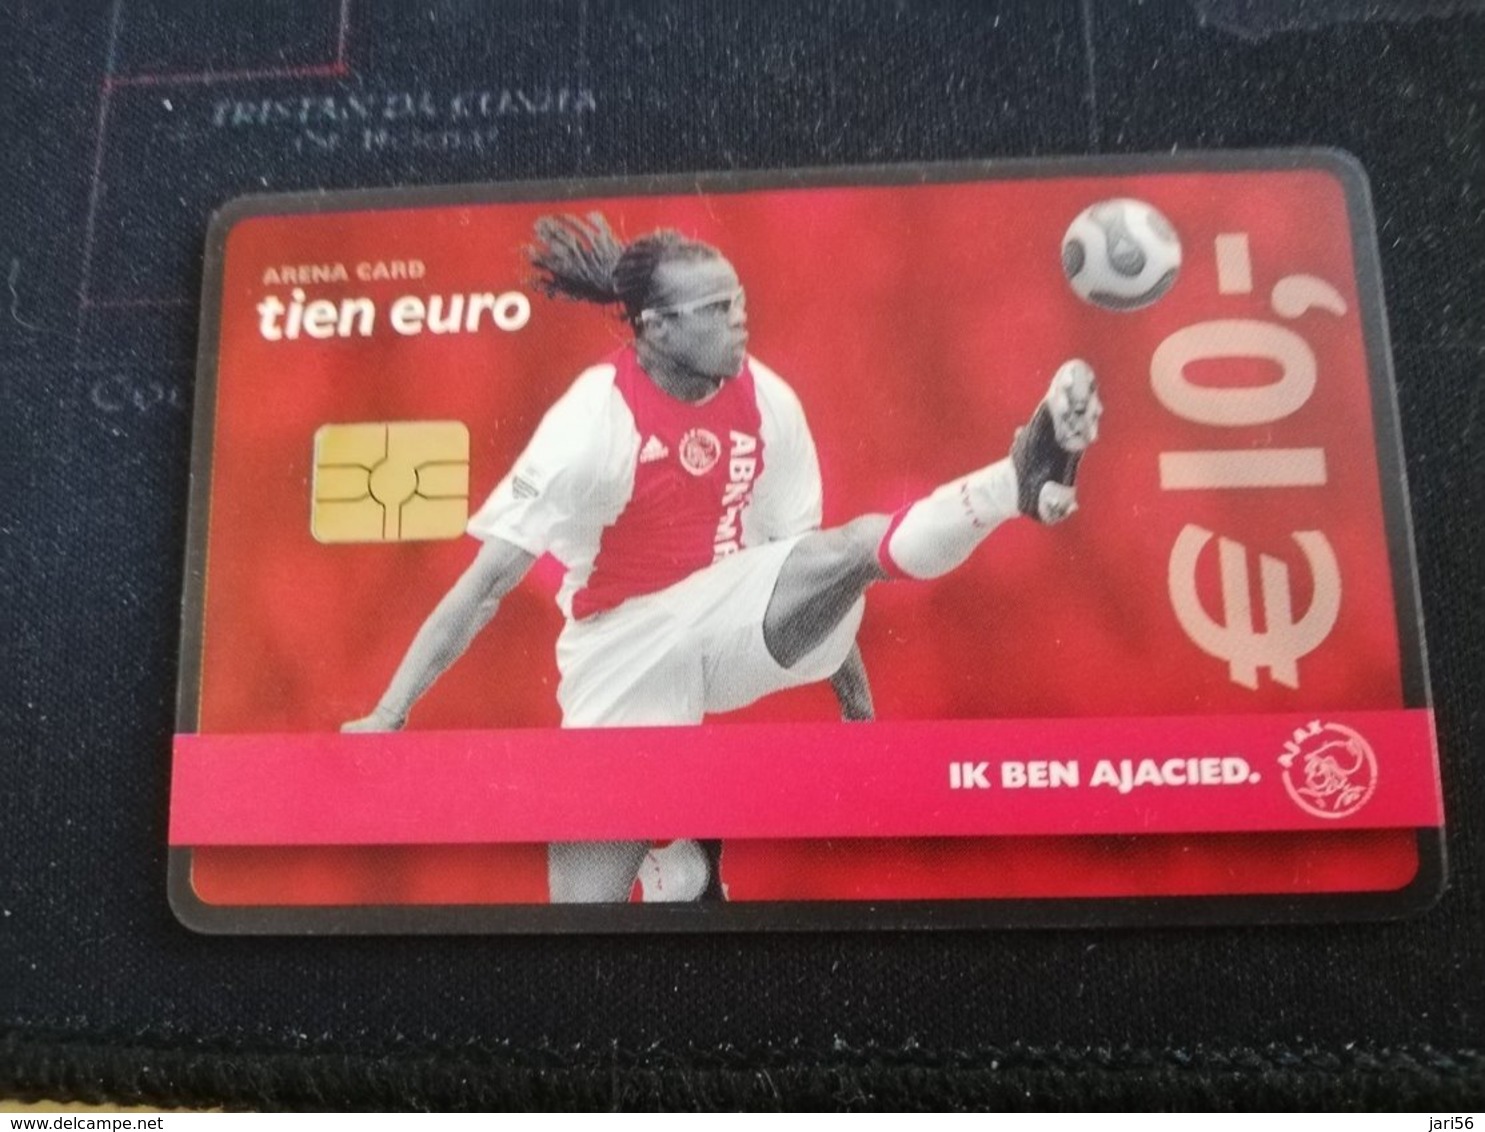 NETHERLANDS  ARENA CARD FOOTBAL/SOCCER  AJAX AMSTERDAM €10,- EDGAR DAVIDS  USED CARD  ** 1417 ** - Openbaar